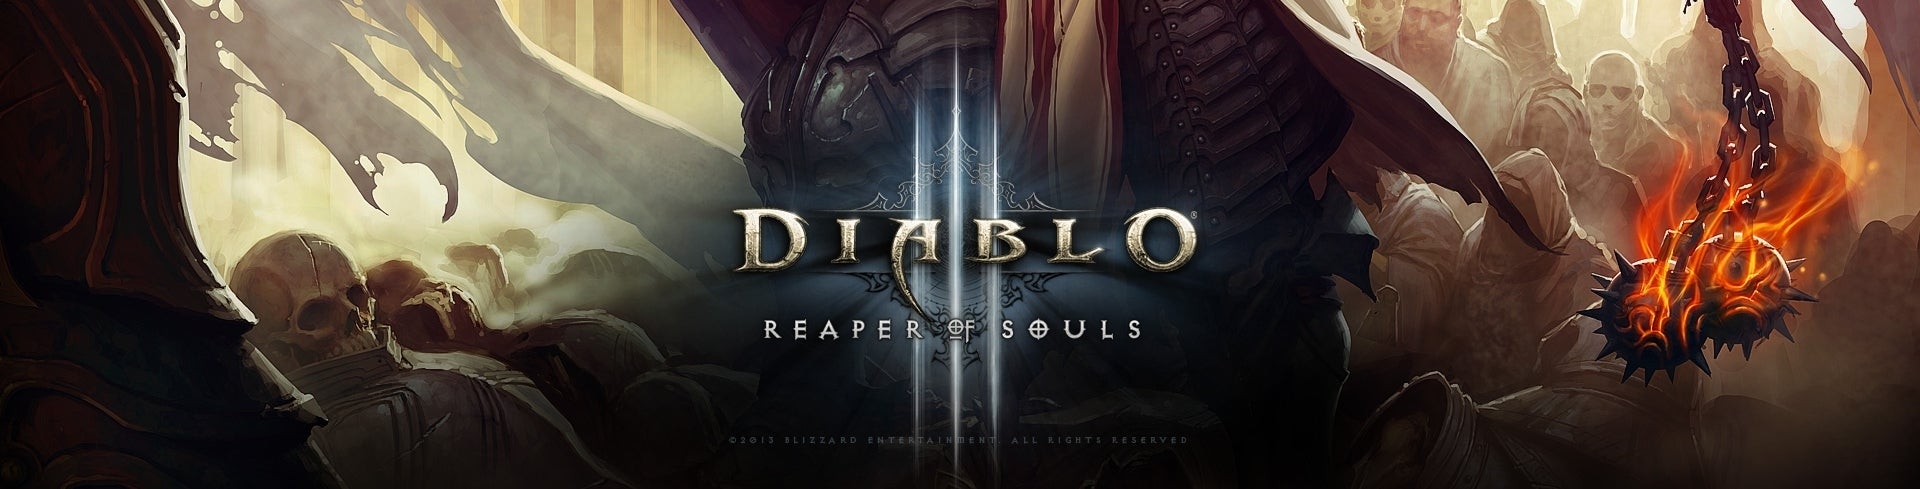 Image for RECENZE: Diablo 3: Reaper of Souls